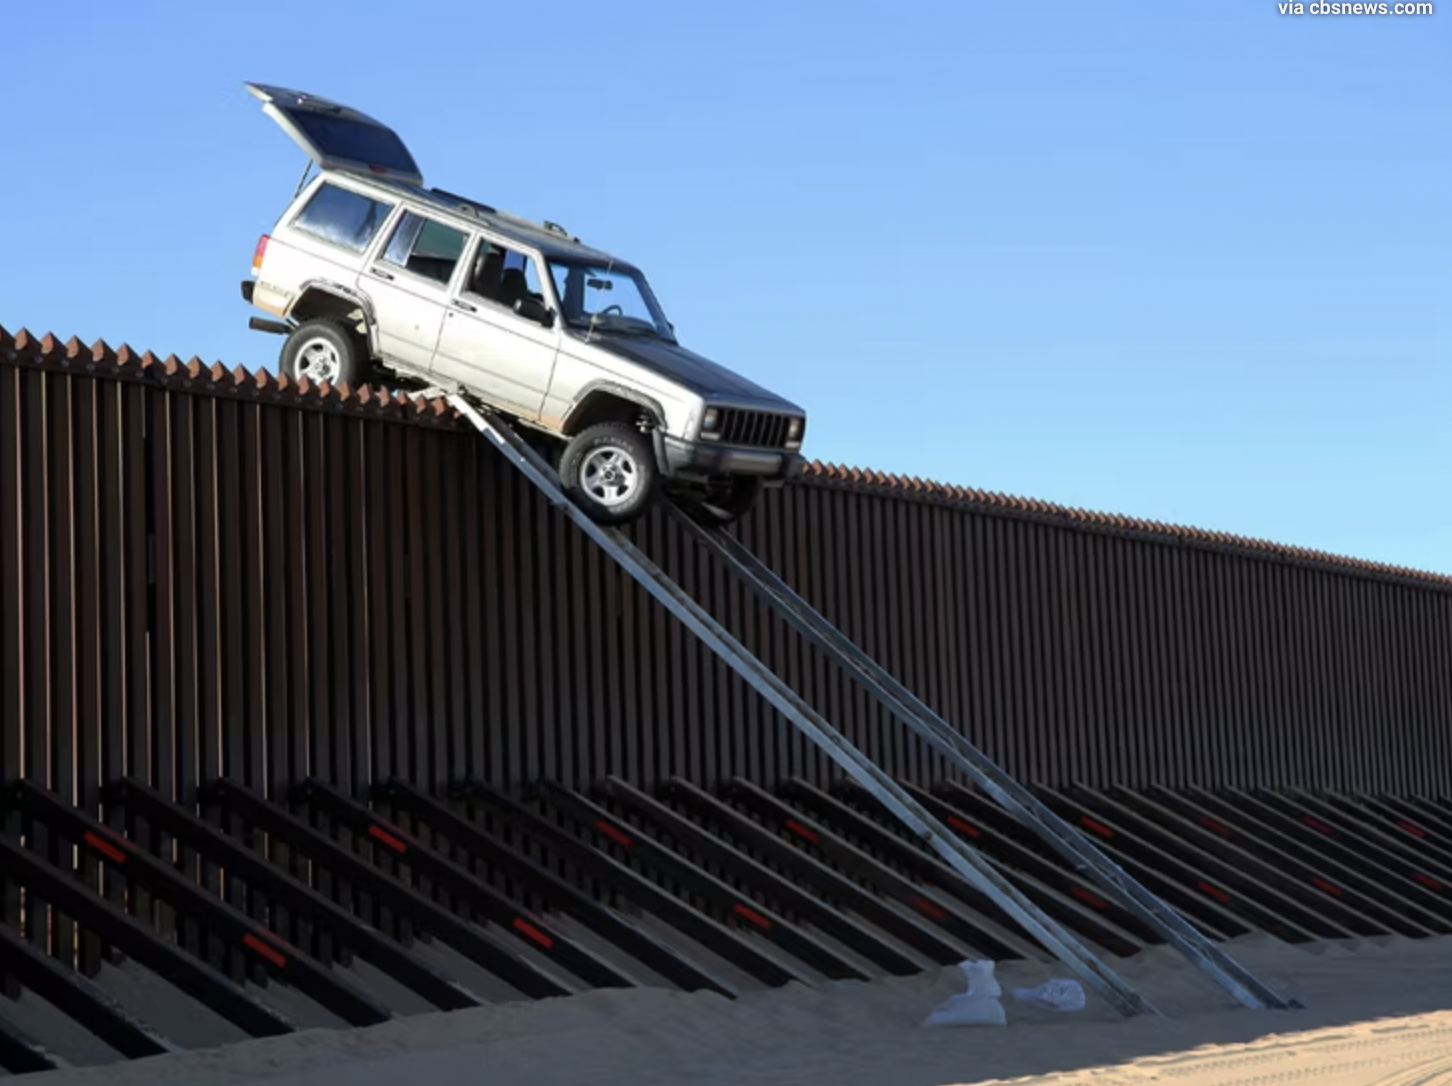 car stuck on border wall - via cbsnews.com